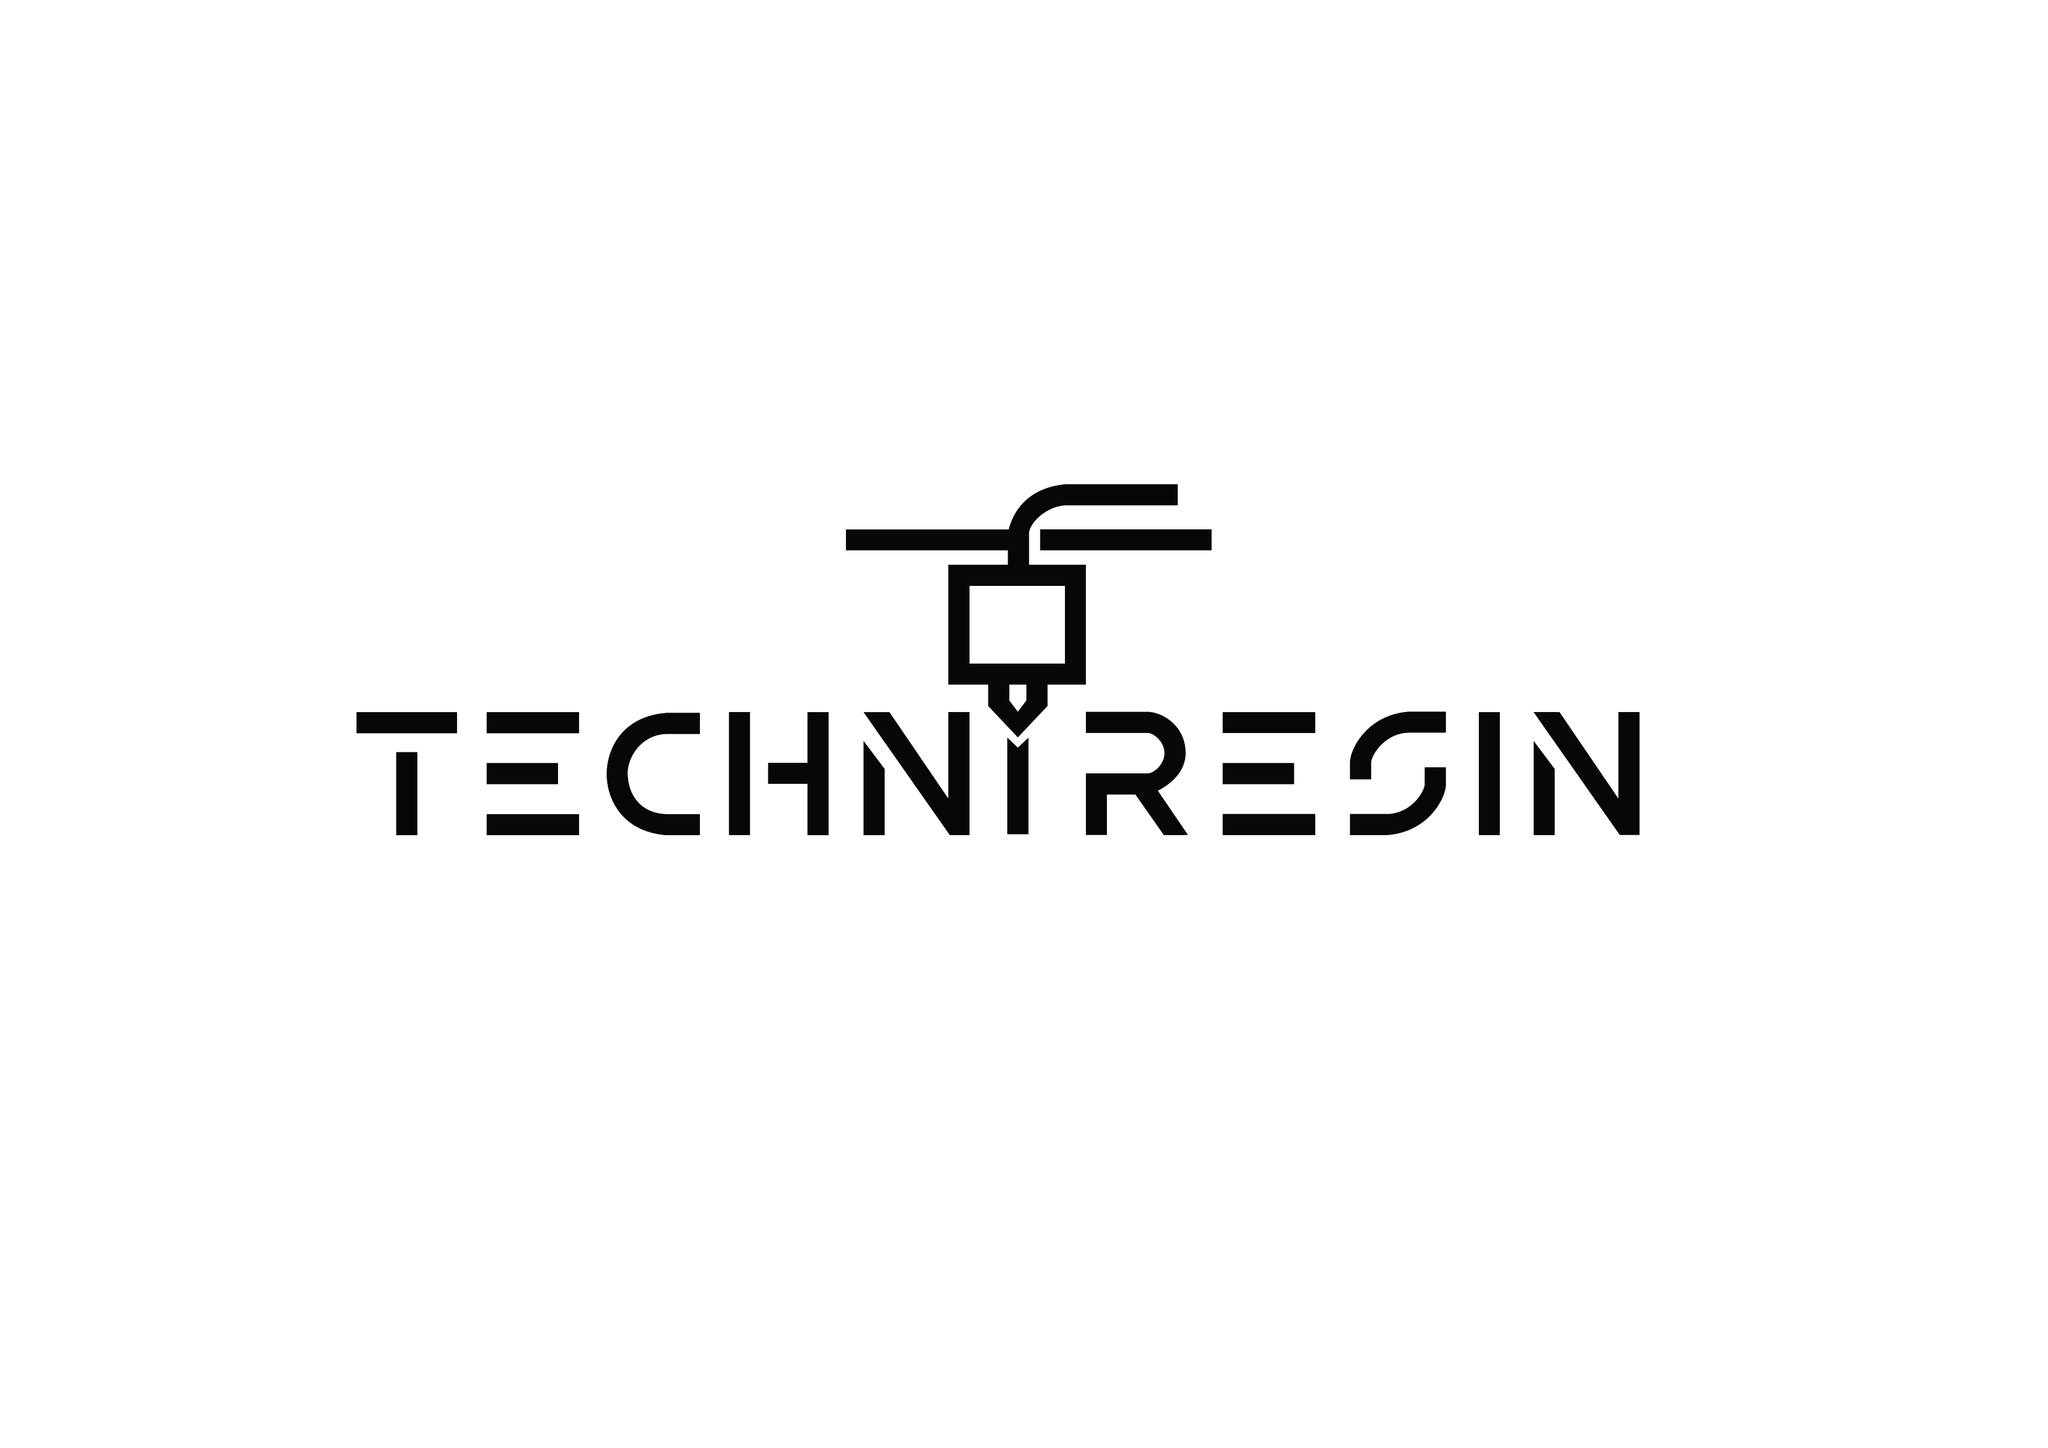 TechniResin